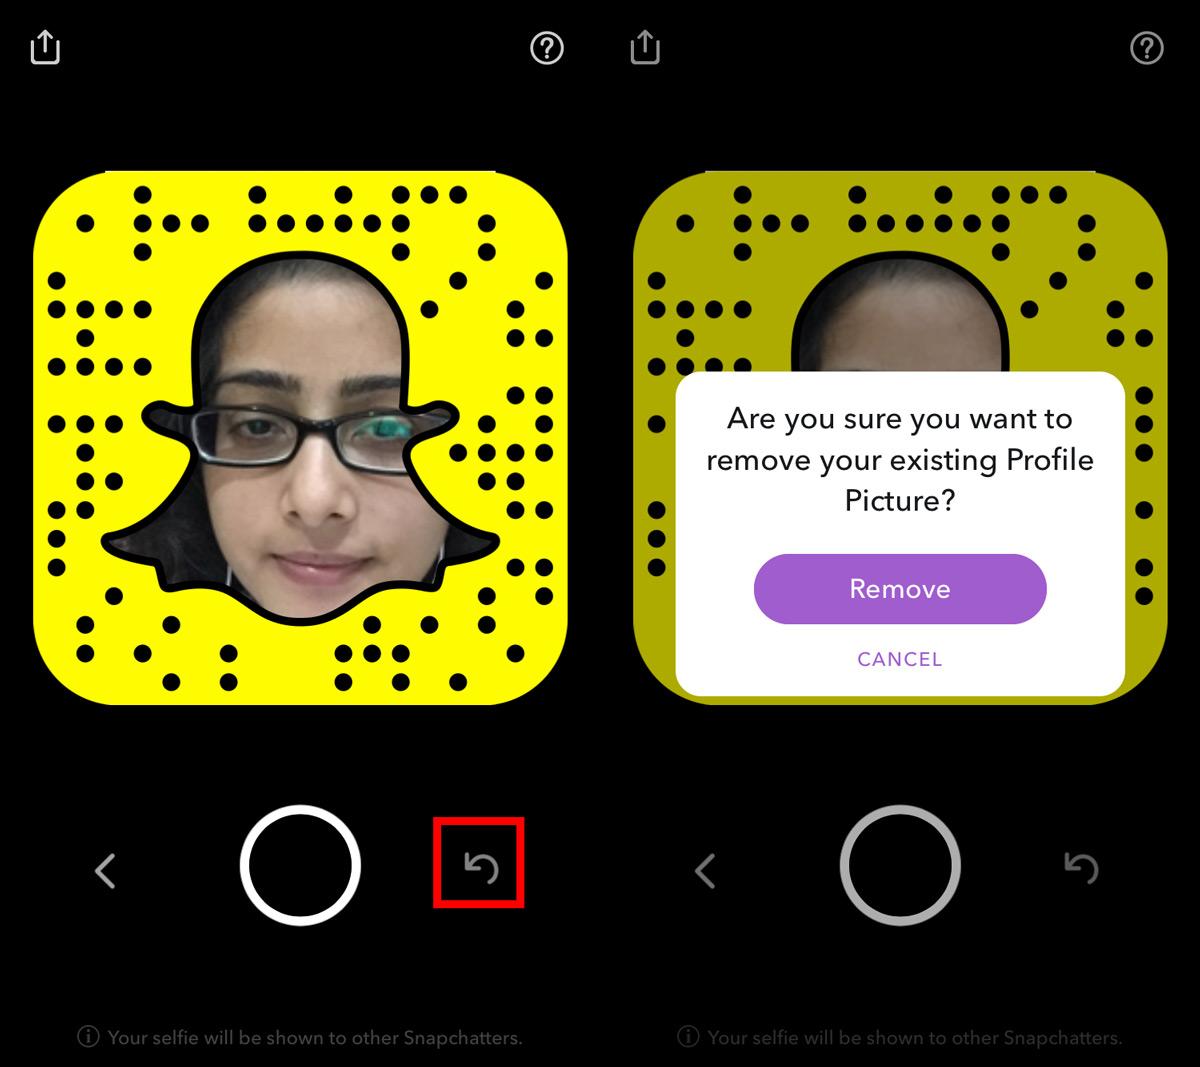 How To Delete Bitmoji On Snapchat